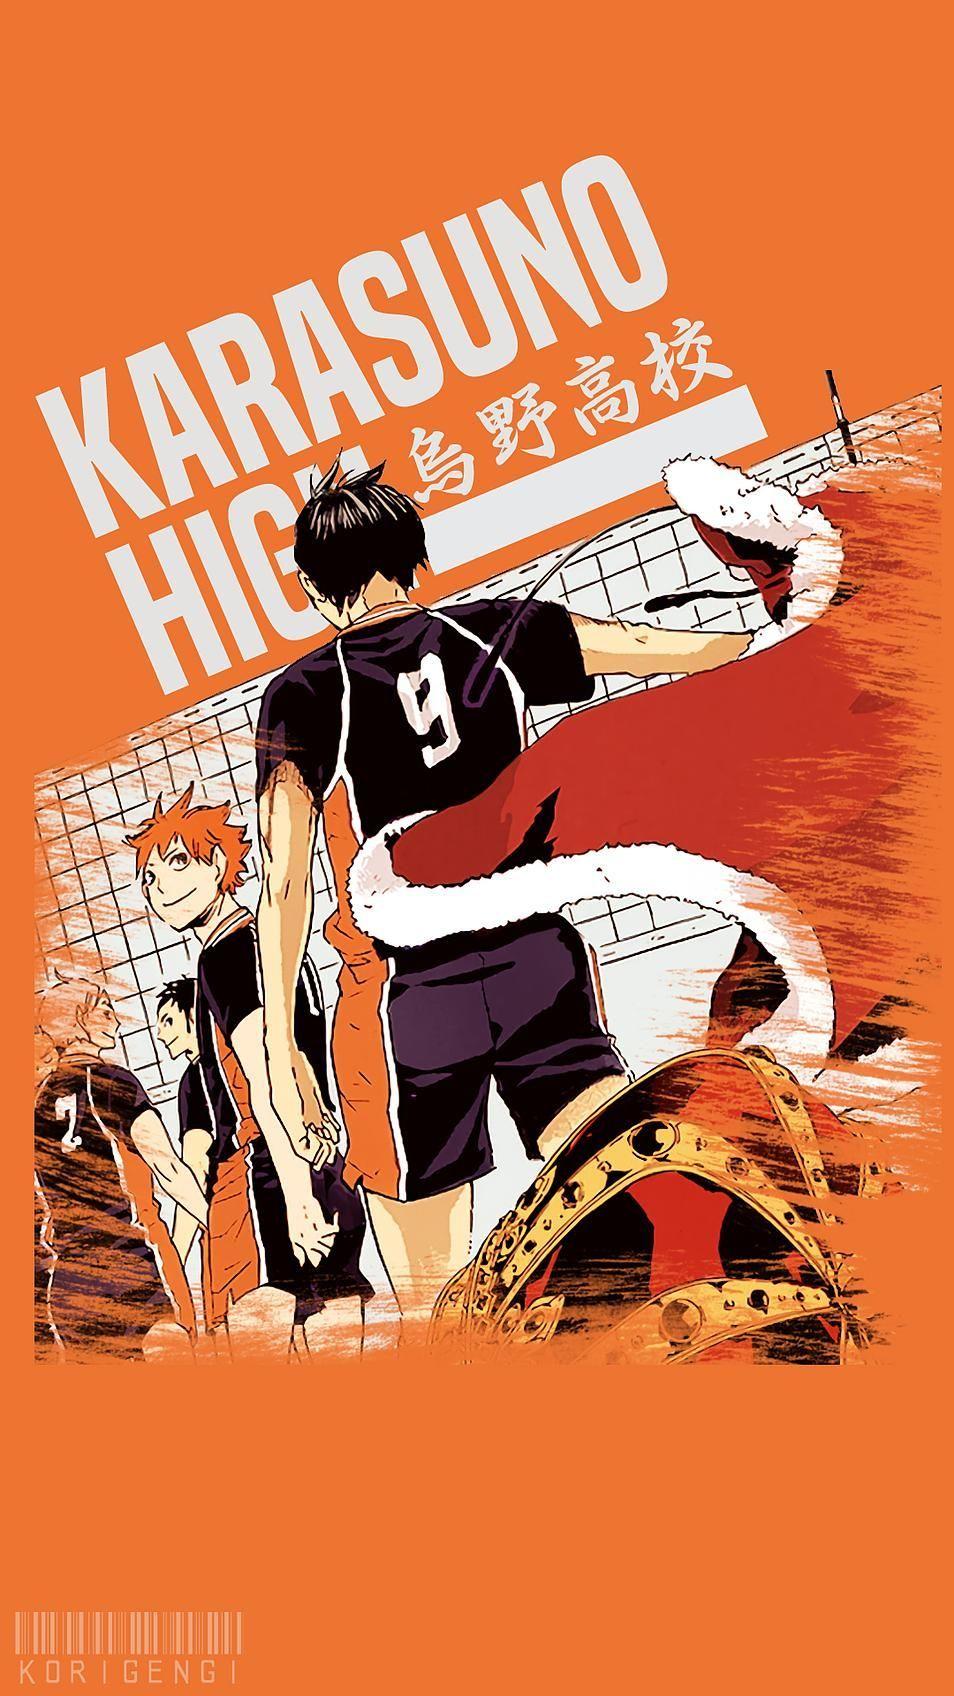 Karasuno High Korigengi. Wallpaper Anime. Haikyuu wallpaper, Haikyuu anime, Haikyuu manga